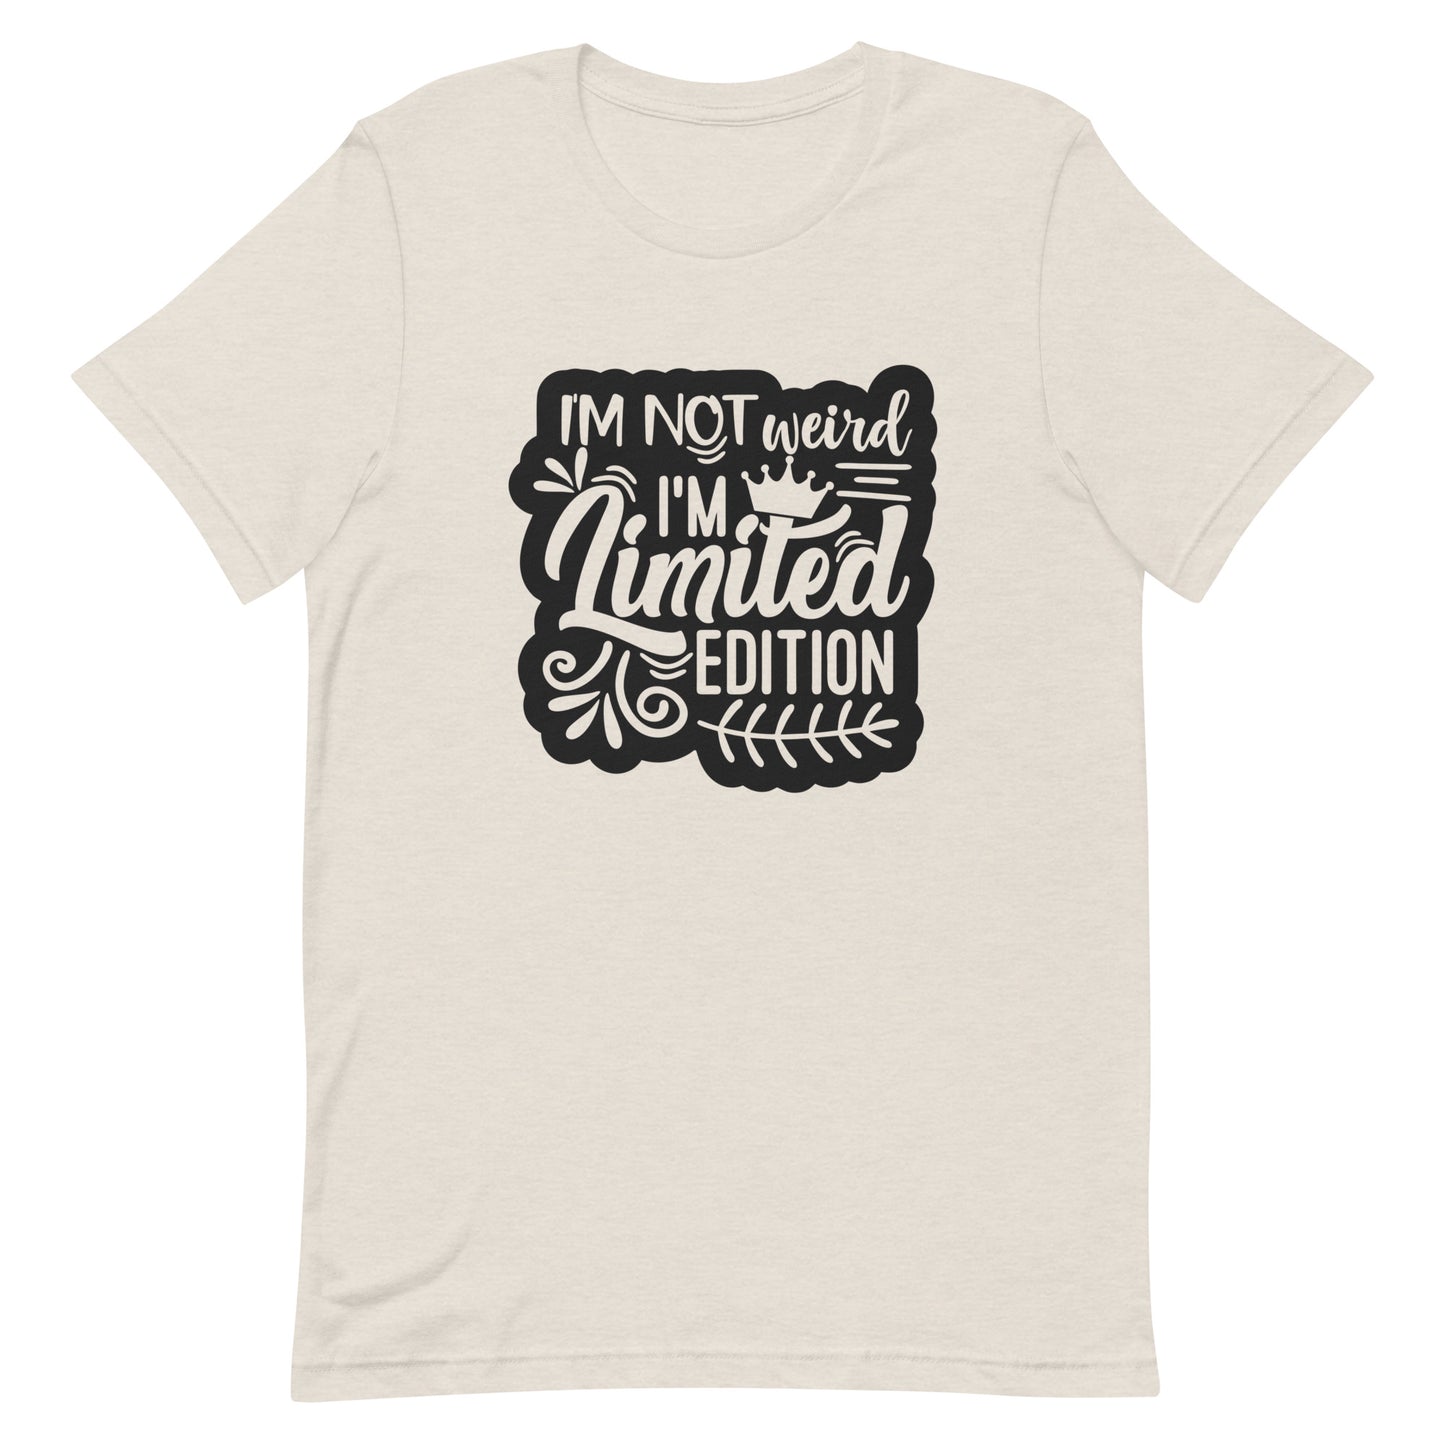 I'm Not Weird I'm Limited Edition Unisex t-shirt